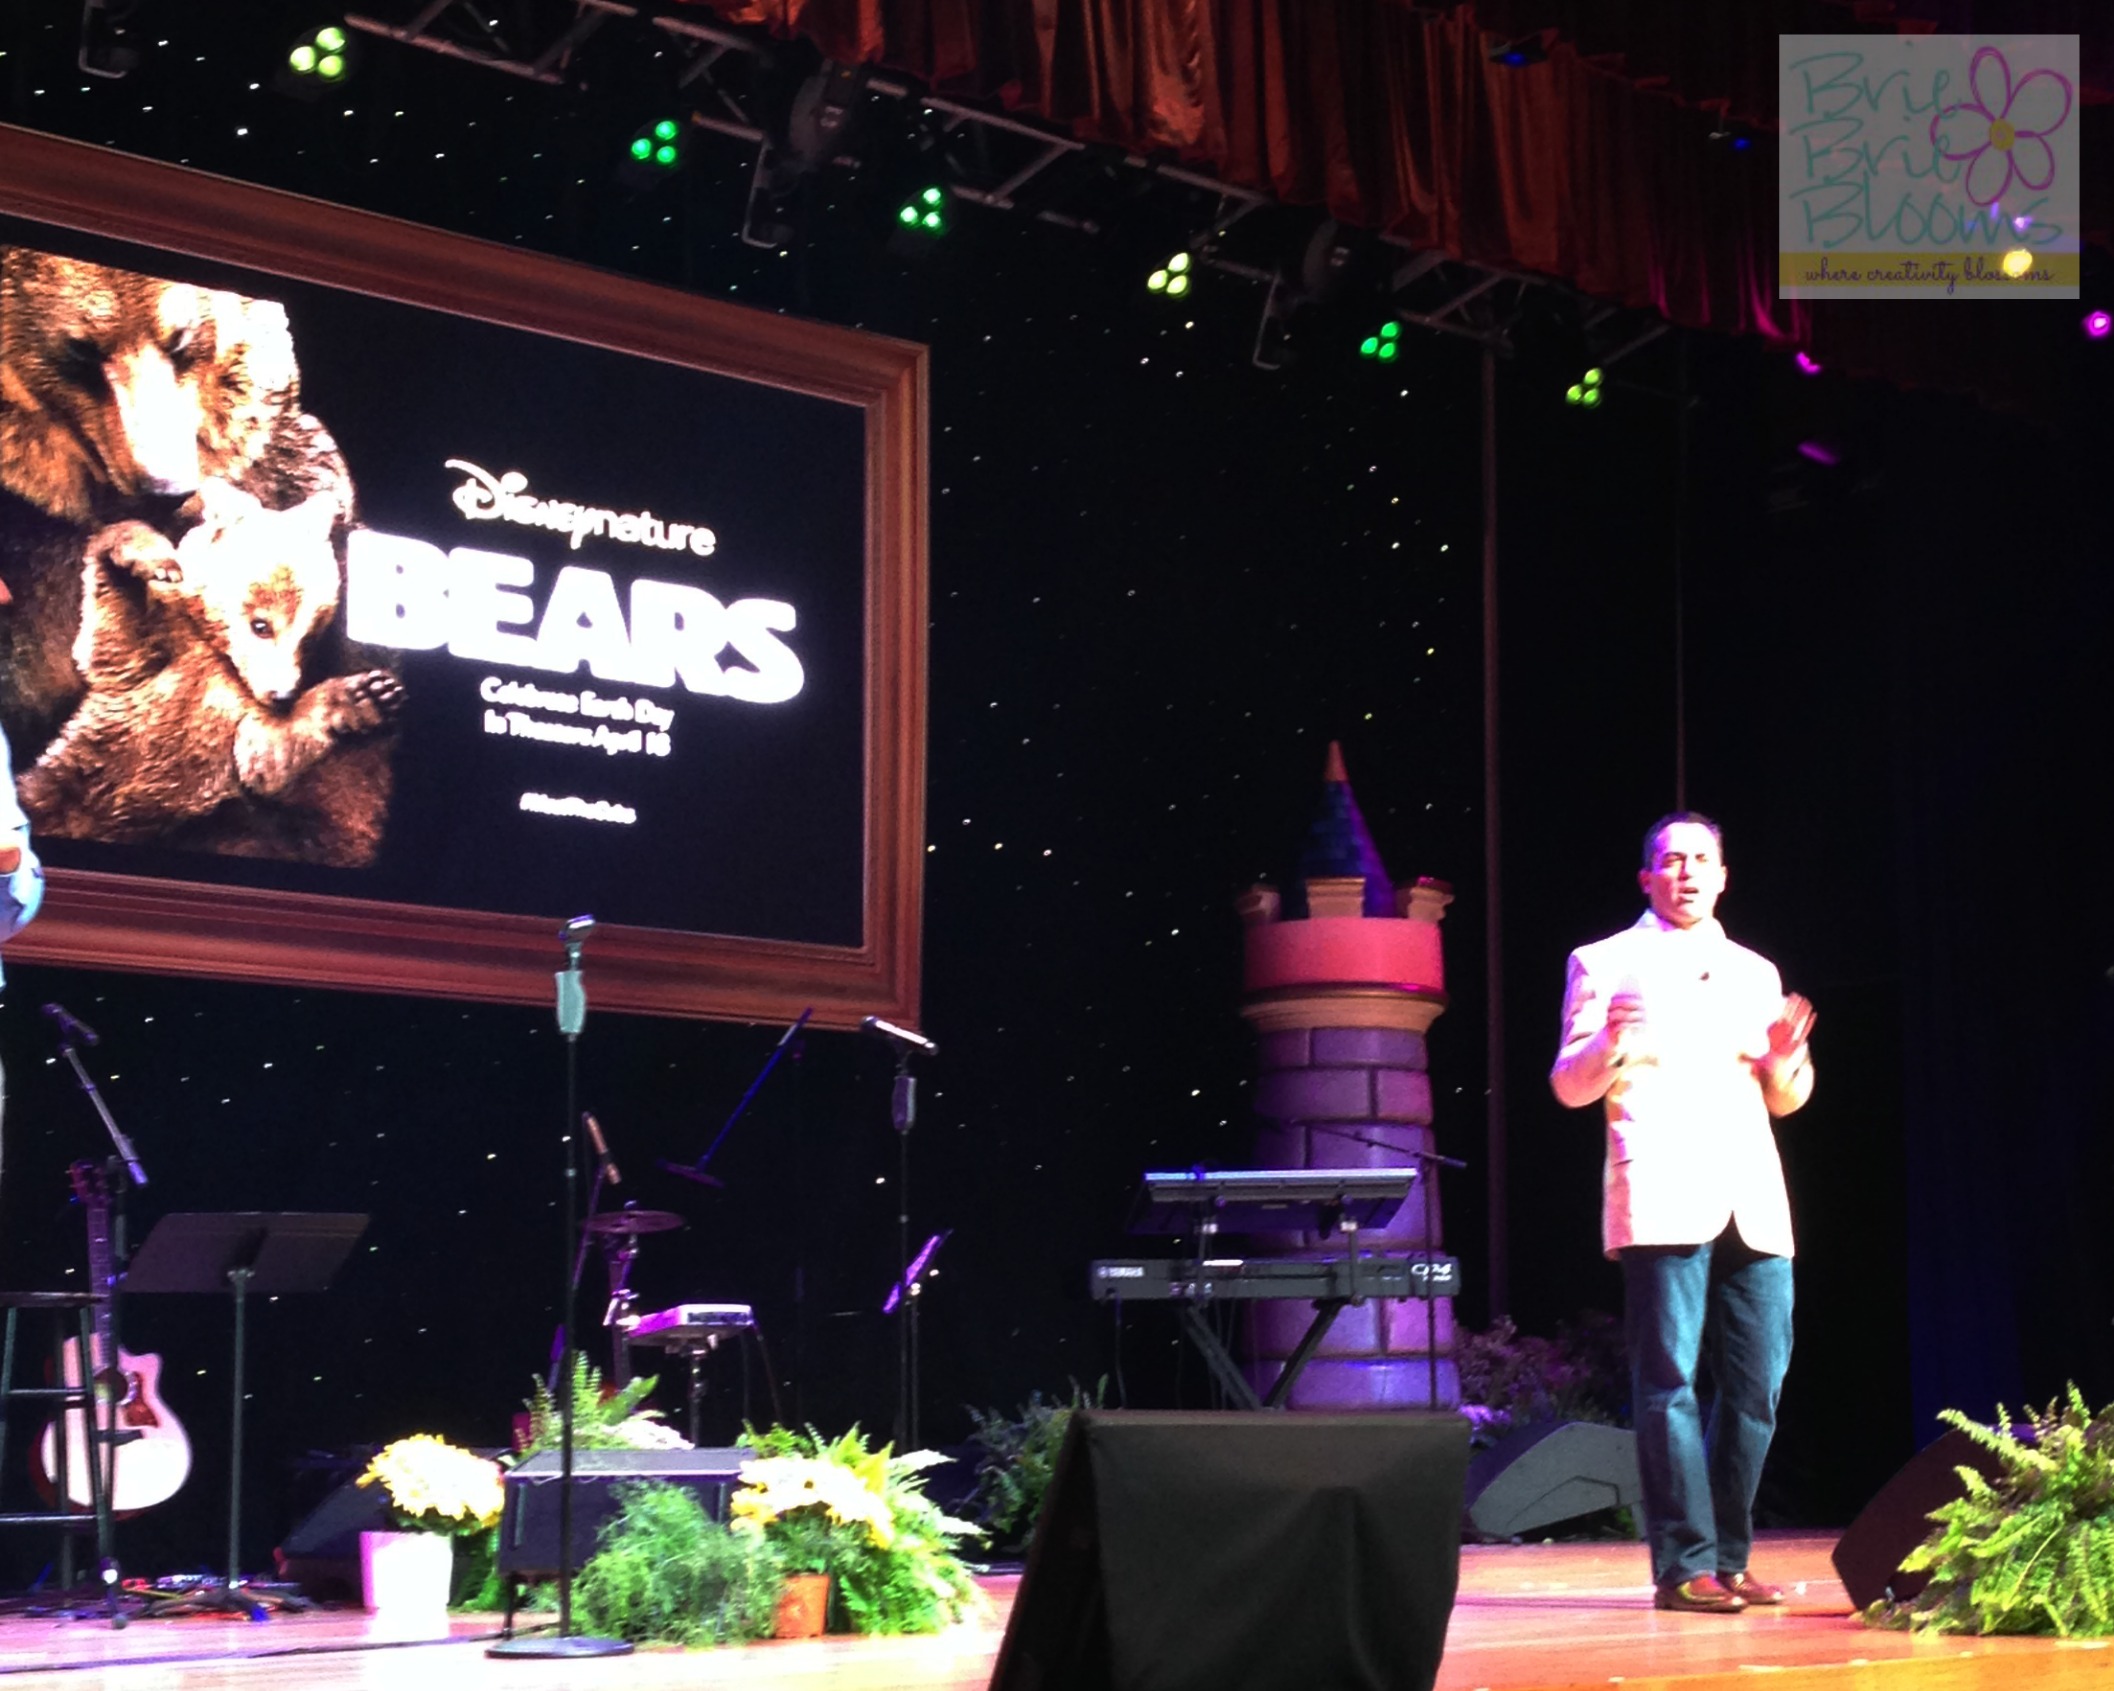 Disneynature-BEARS-presentation-at-Disney-Social-Media-Moms-Celebration